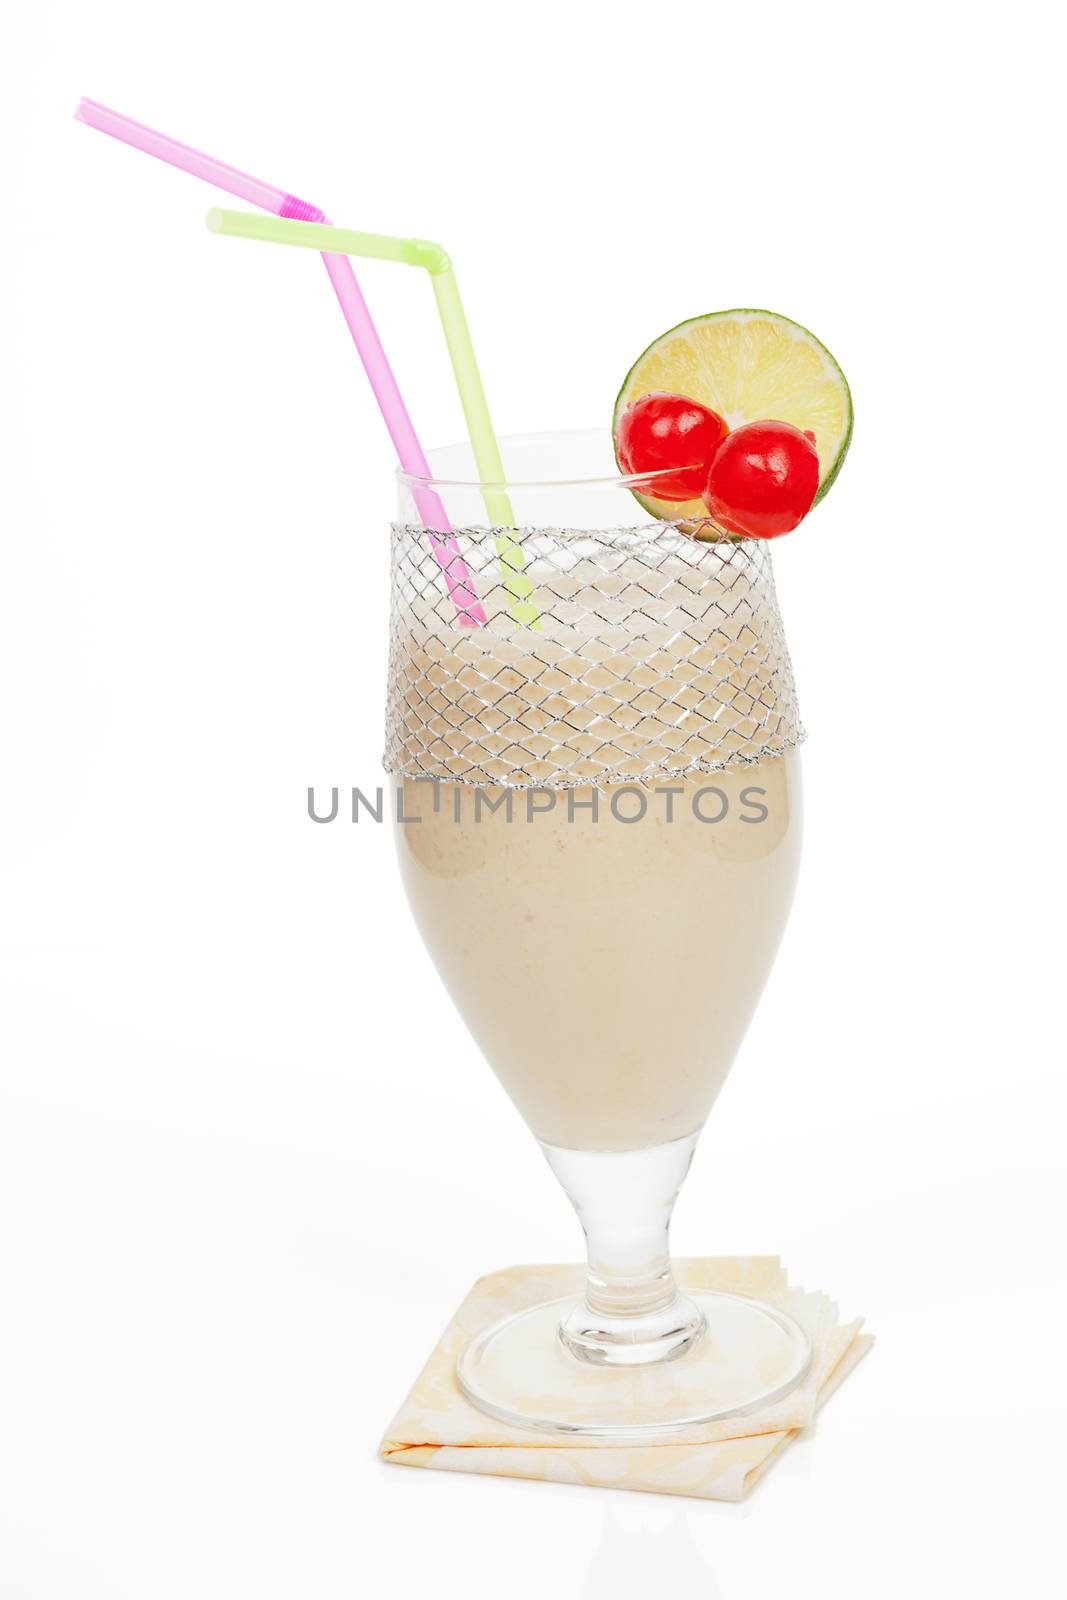 Delicious banana milkshake with cherry and lemon garnish isolated on white background. Healthy summer drinks.